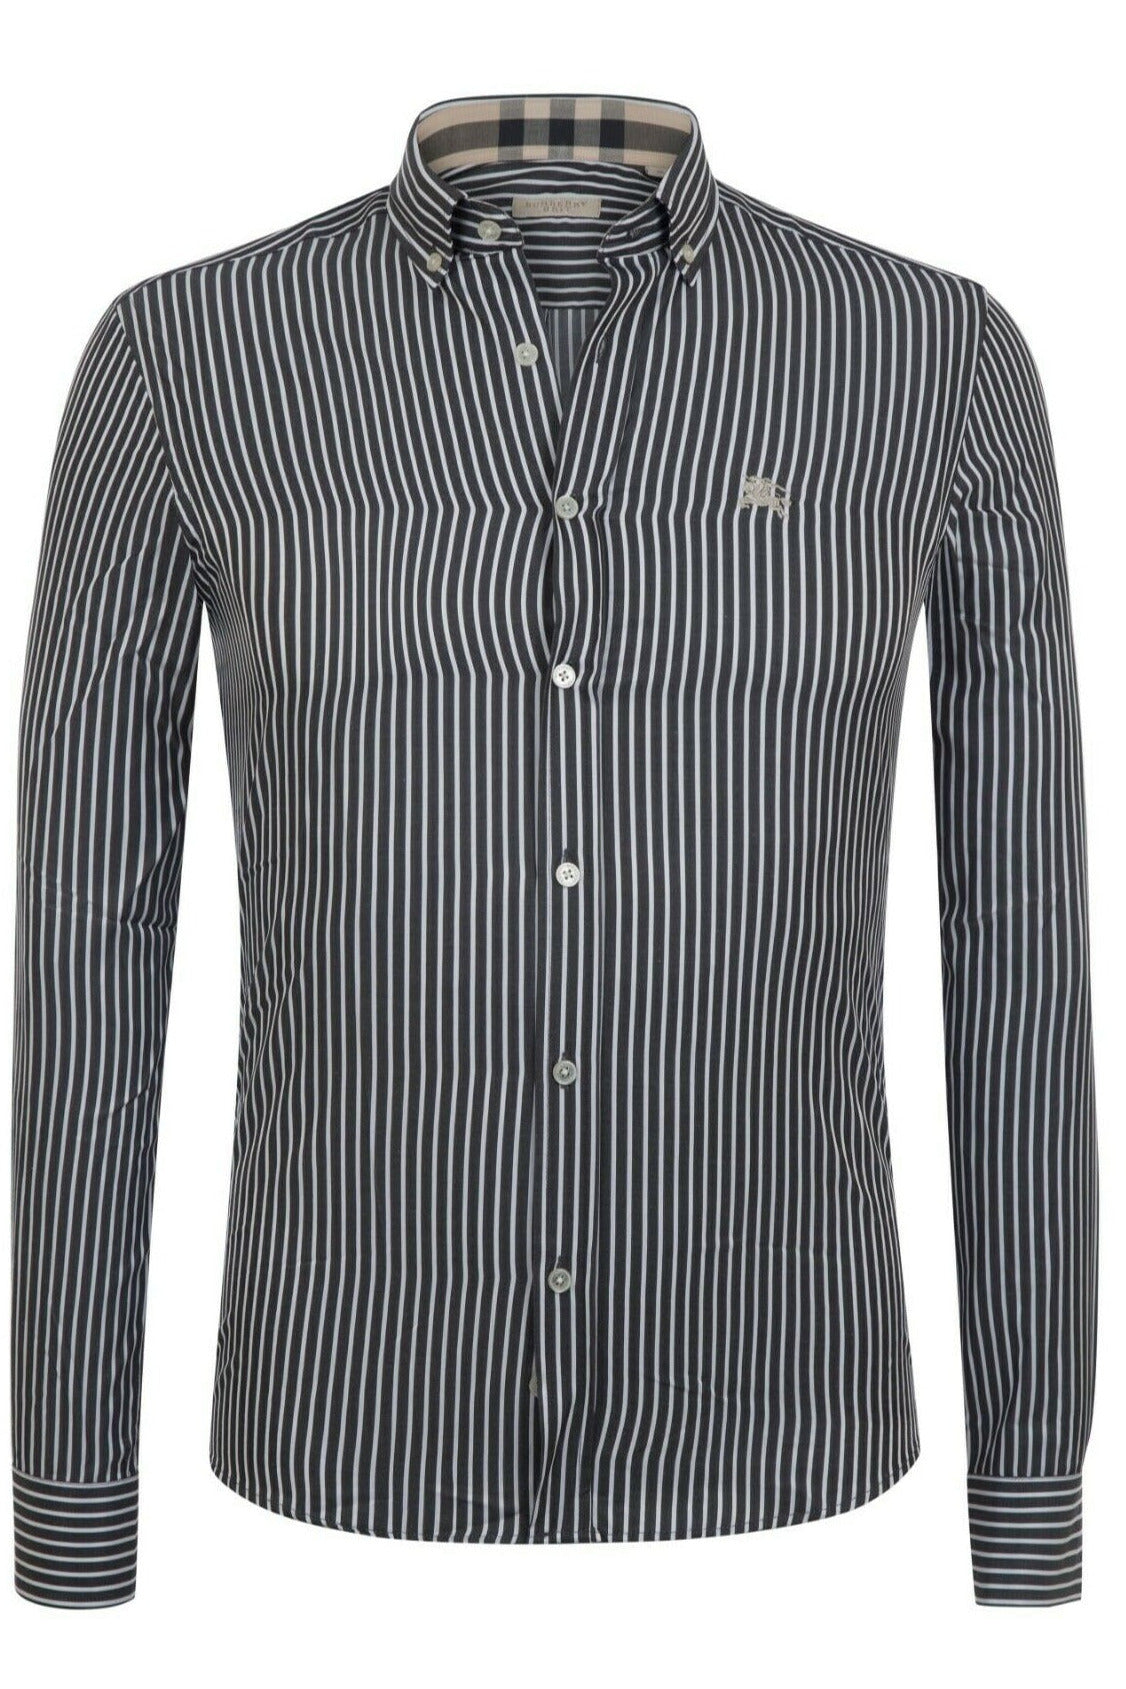 Grey Men's Burberry Casual Shirt Long Sleeve